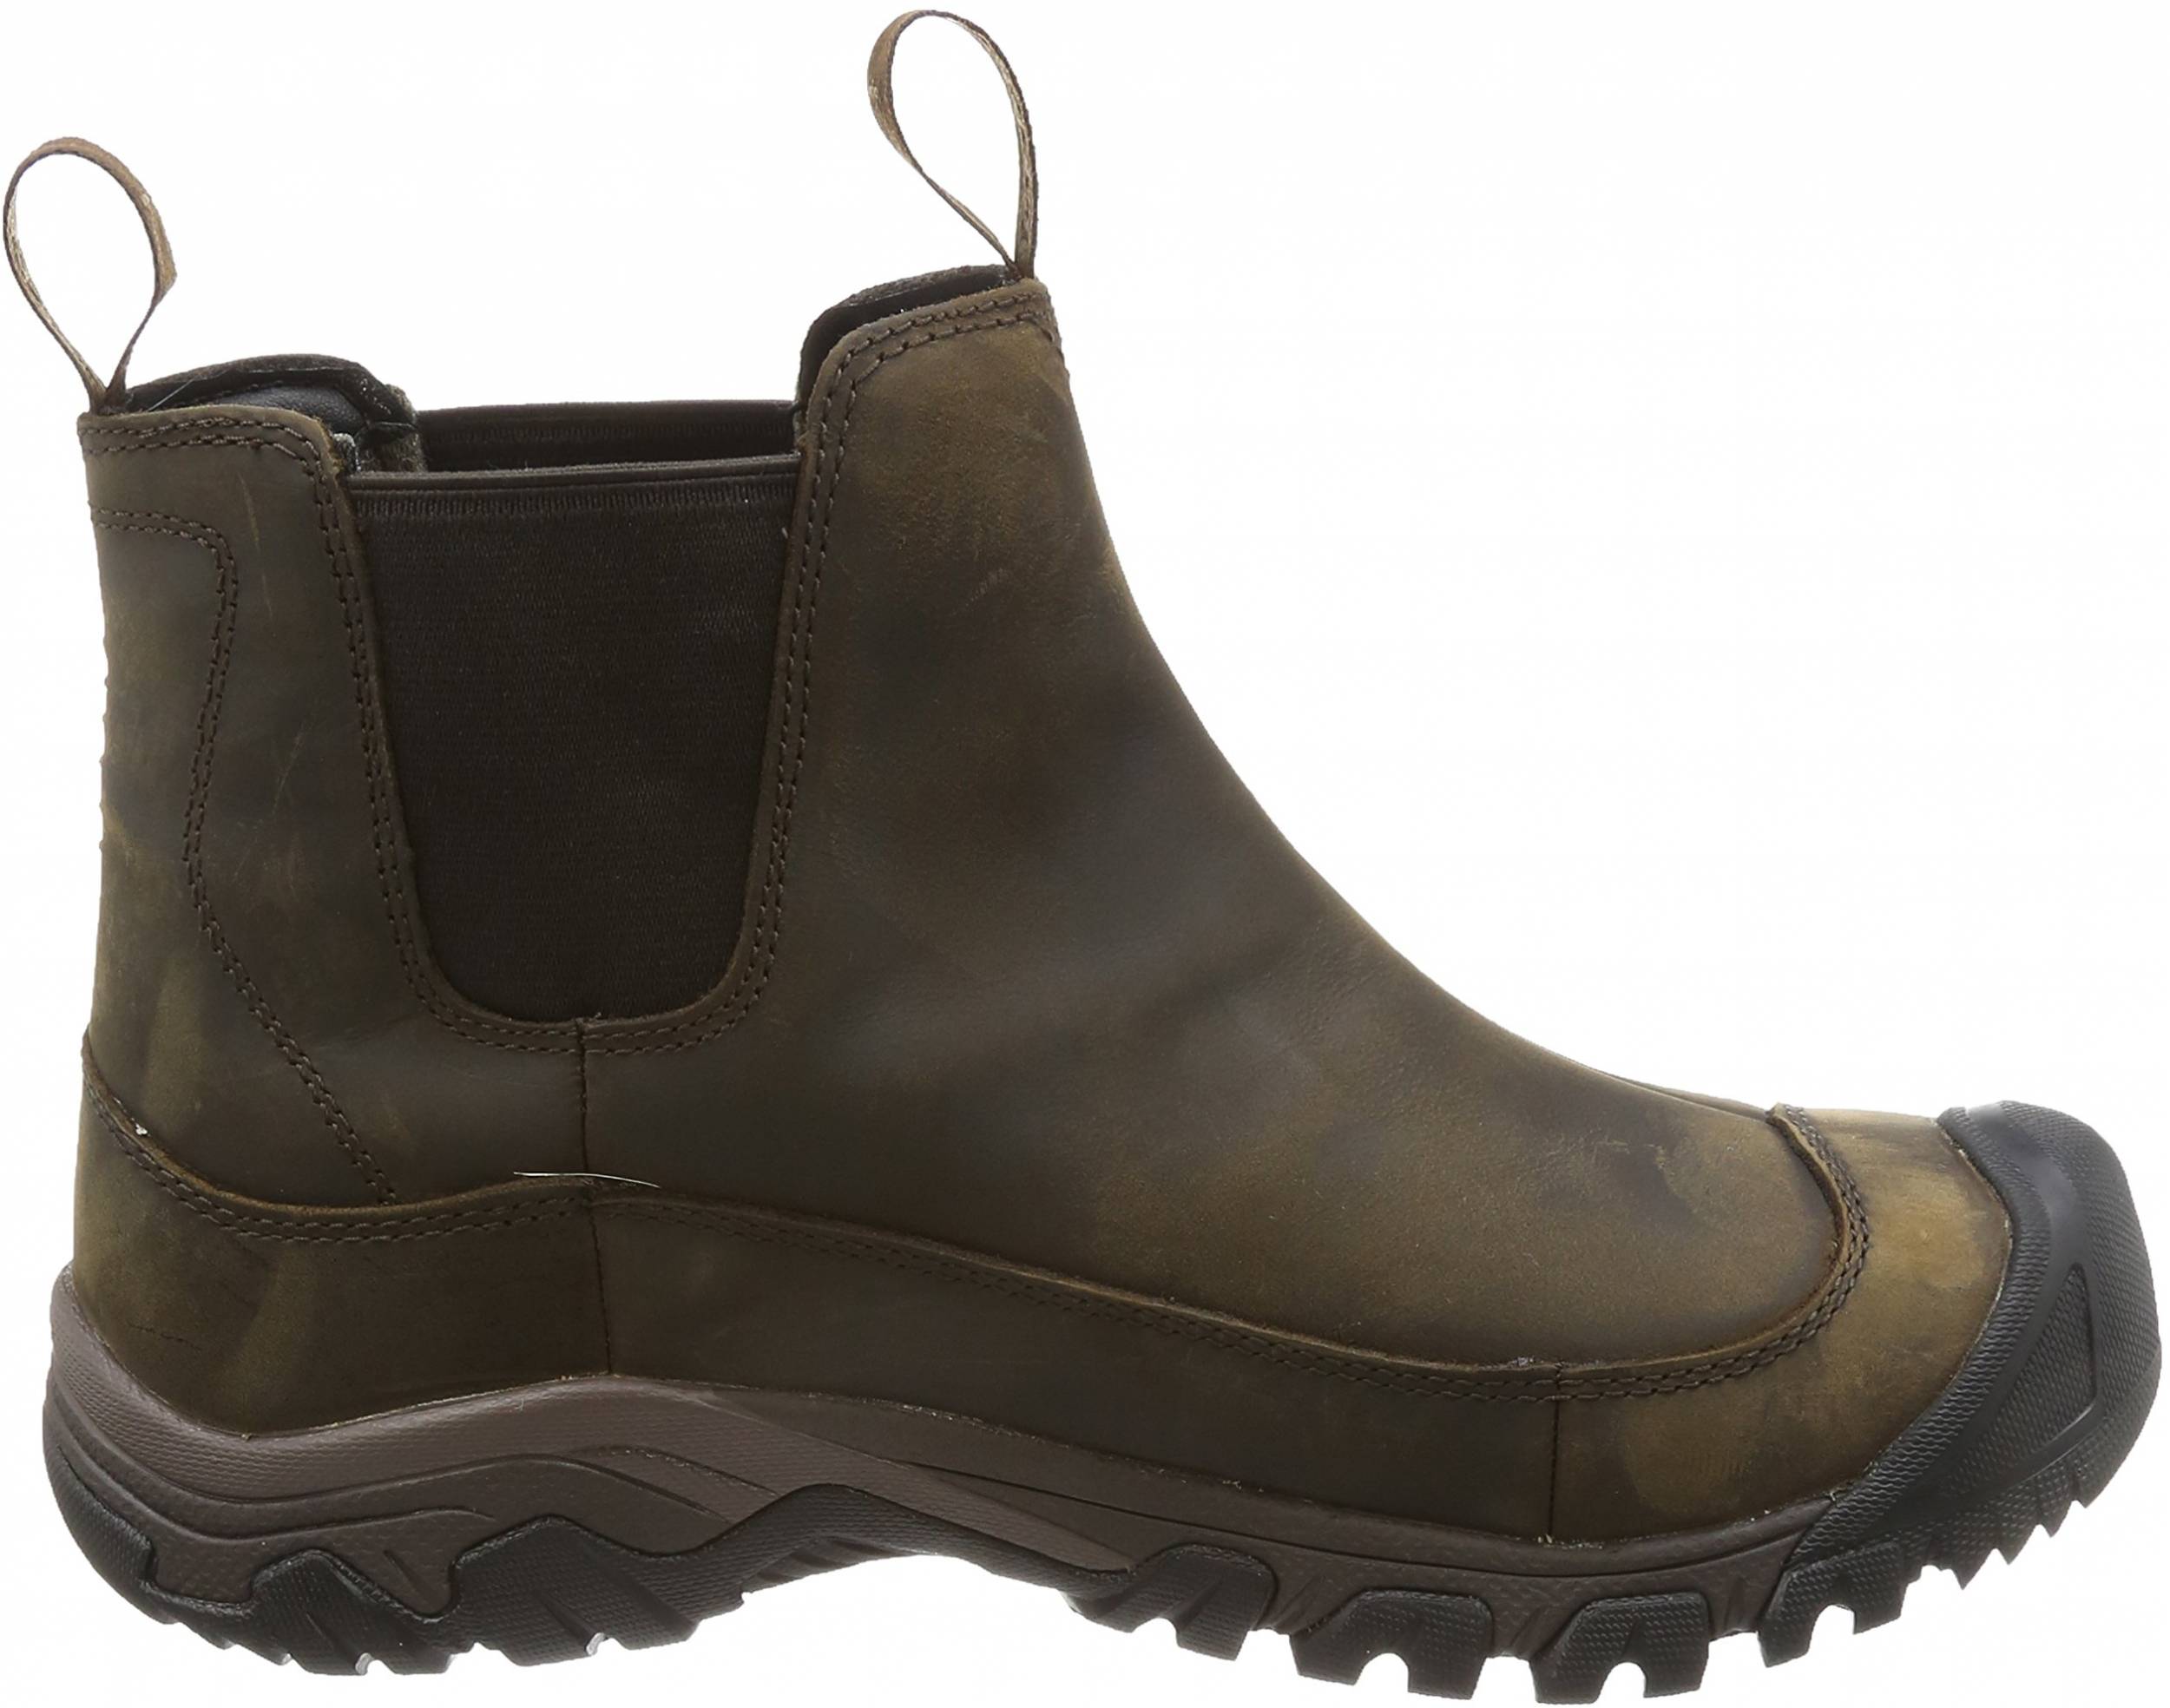 Yellowish Importance panic KEEN Anchorage III Waterproof Boot sneakers in black + brown (only £94) |  RunRepeat